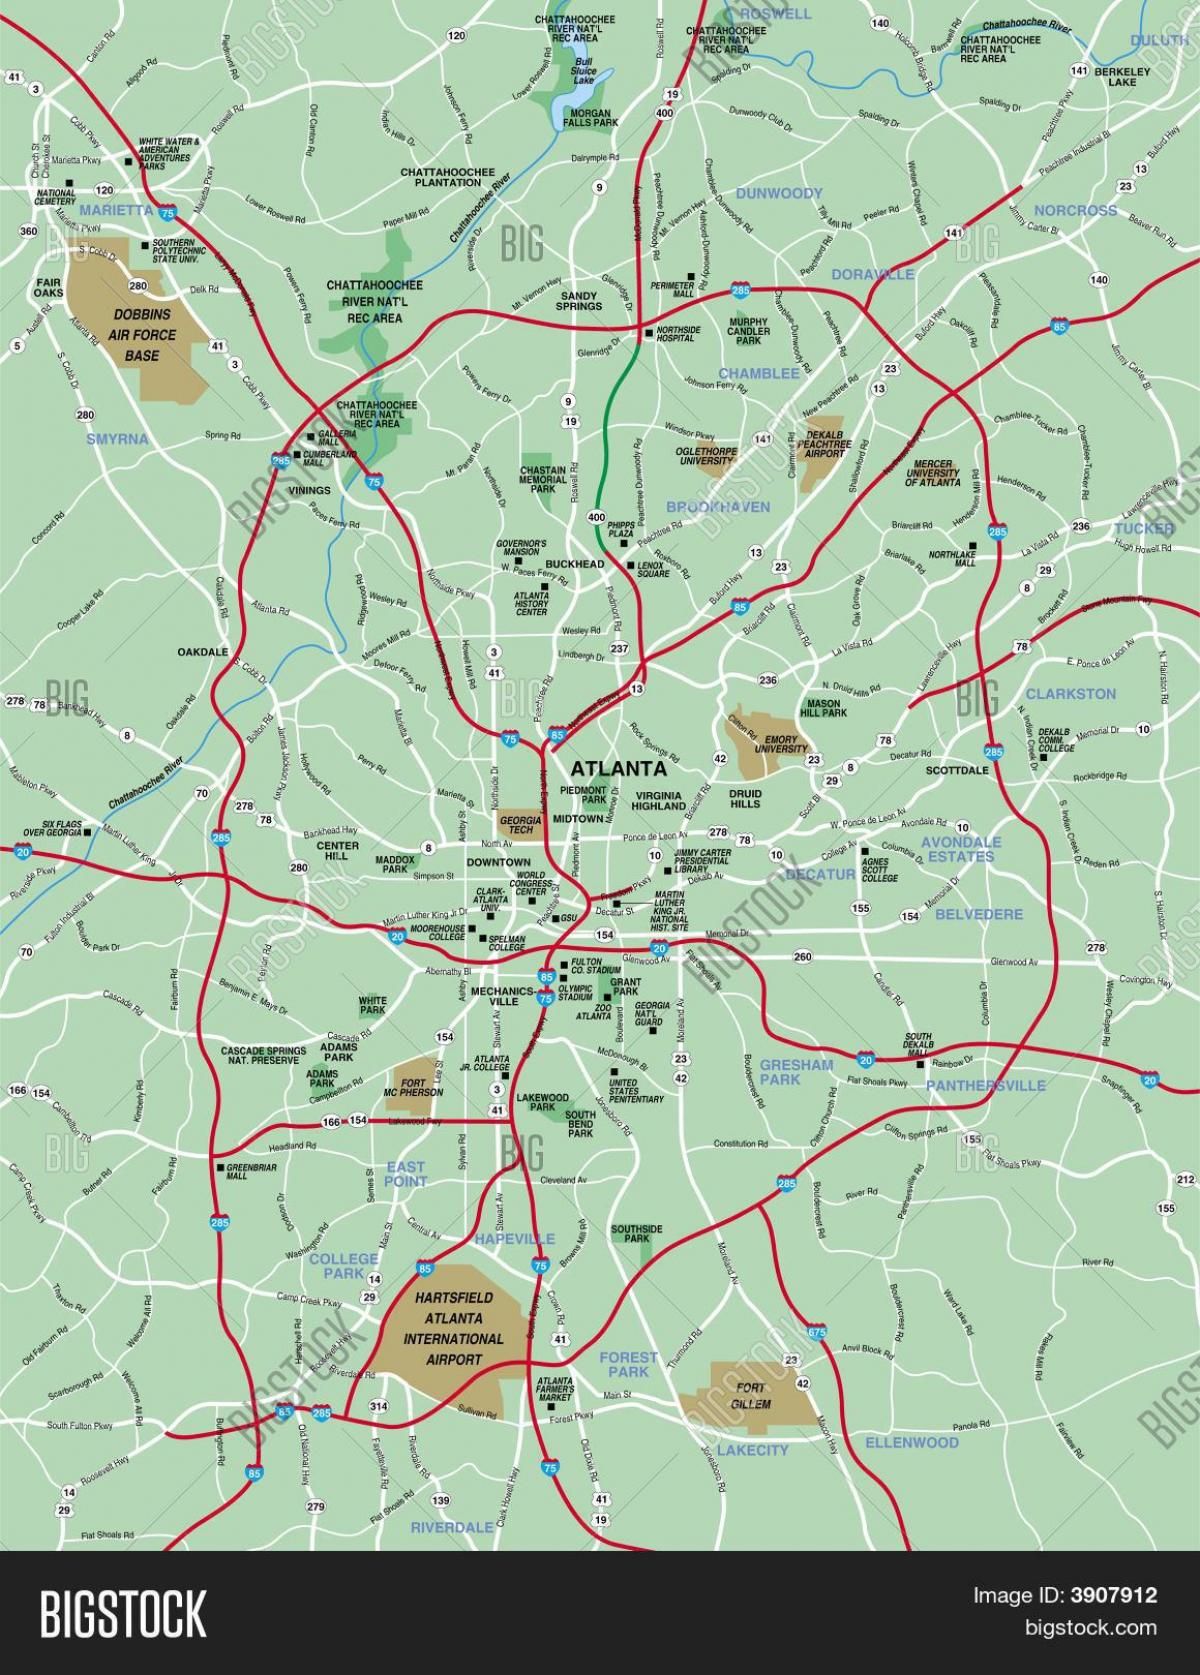 mas malaki Atlanta area mapa